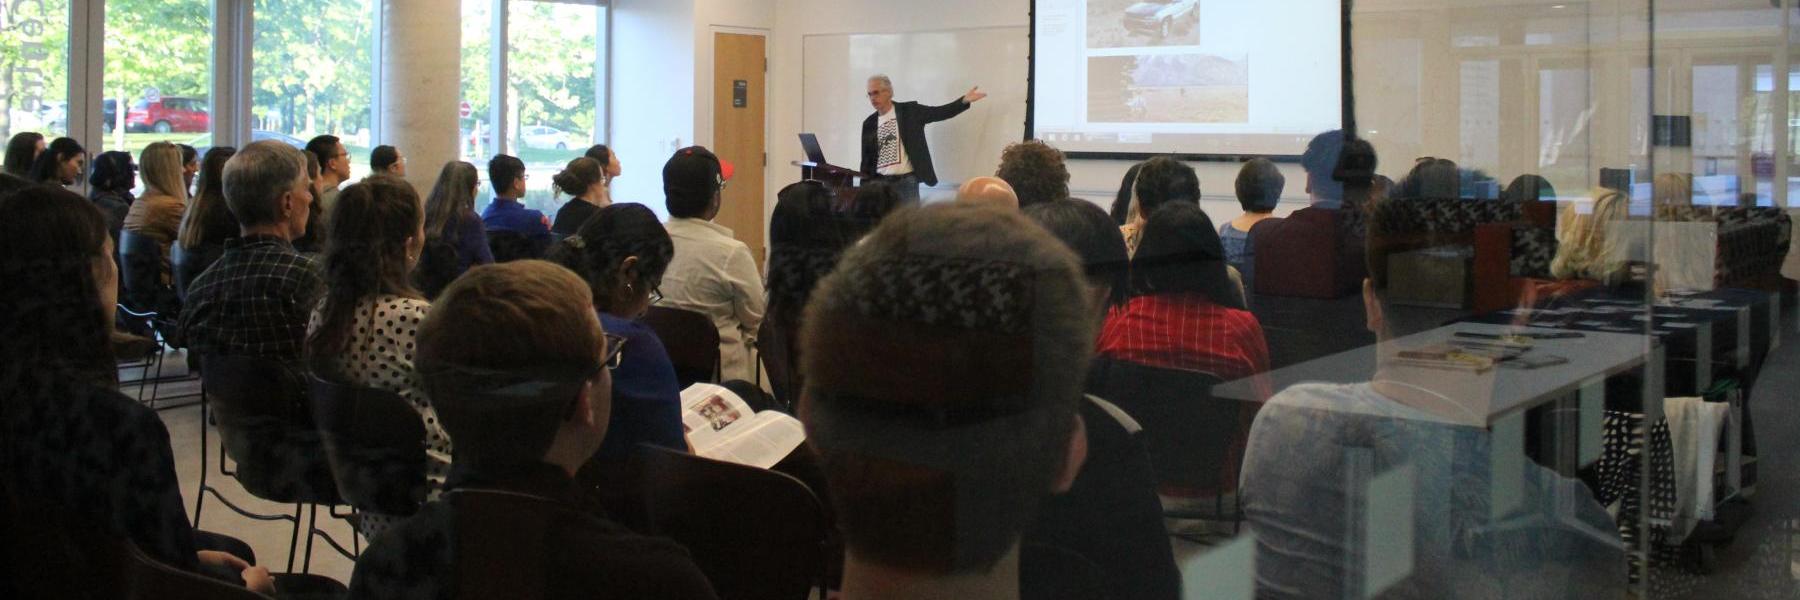 Professor Lenard conducting an alumni lecture